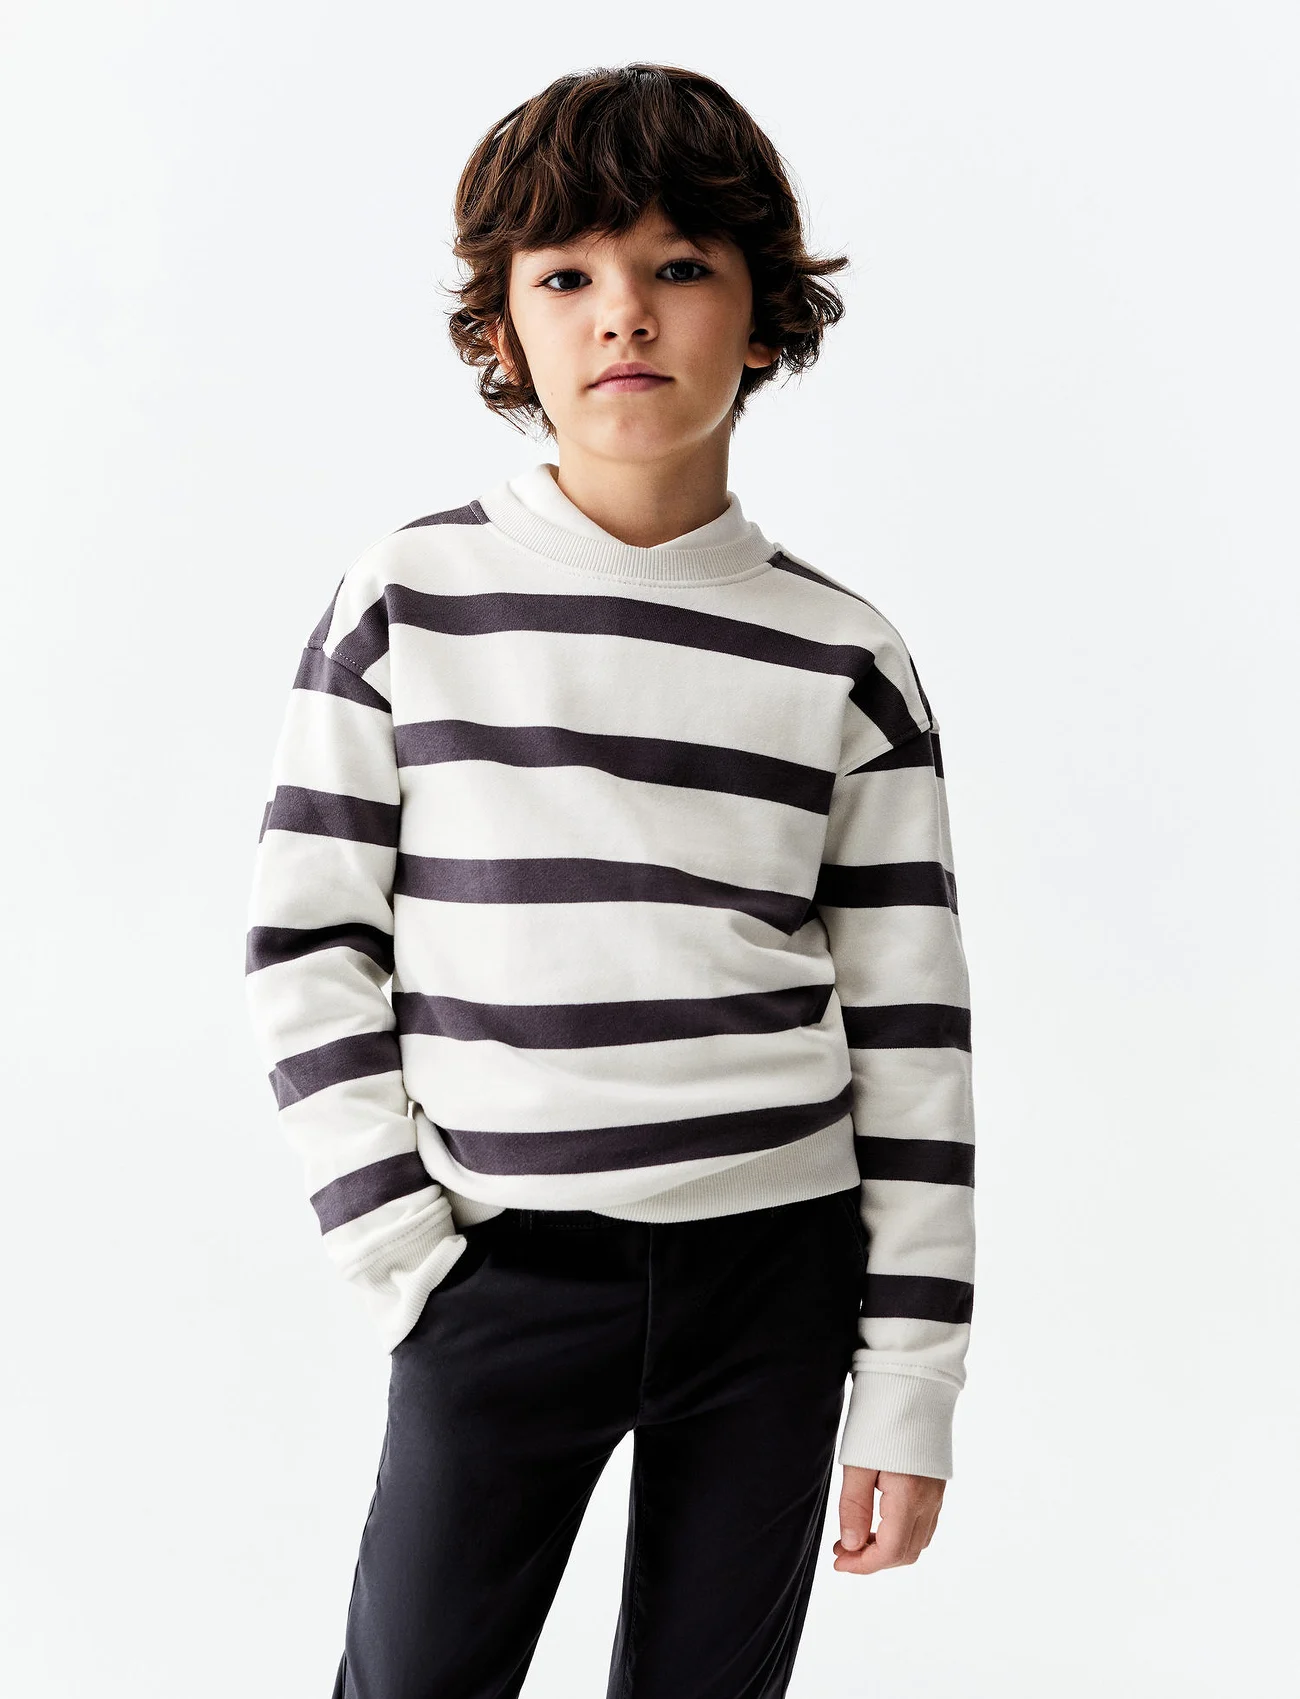 Mango - Striped print sweatshirt - sweatshirts - charcoal - 0